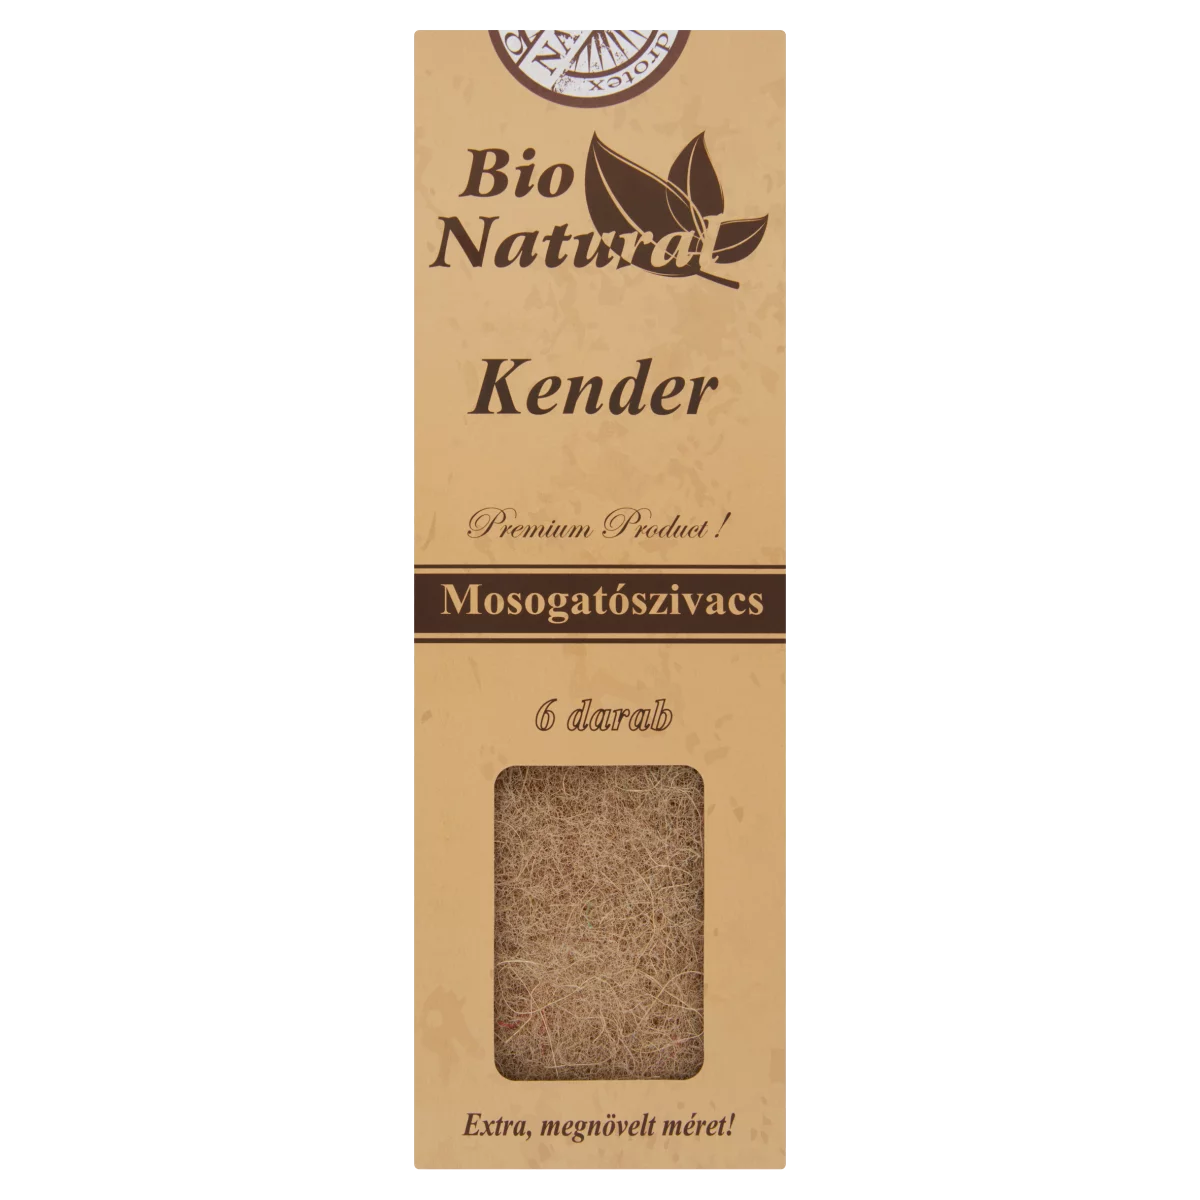 Bio Natural Kender prémium mosogatószivacs 6 db